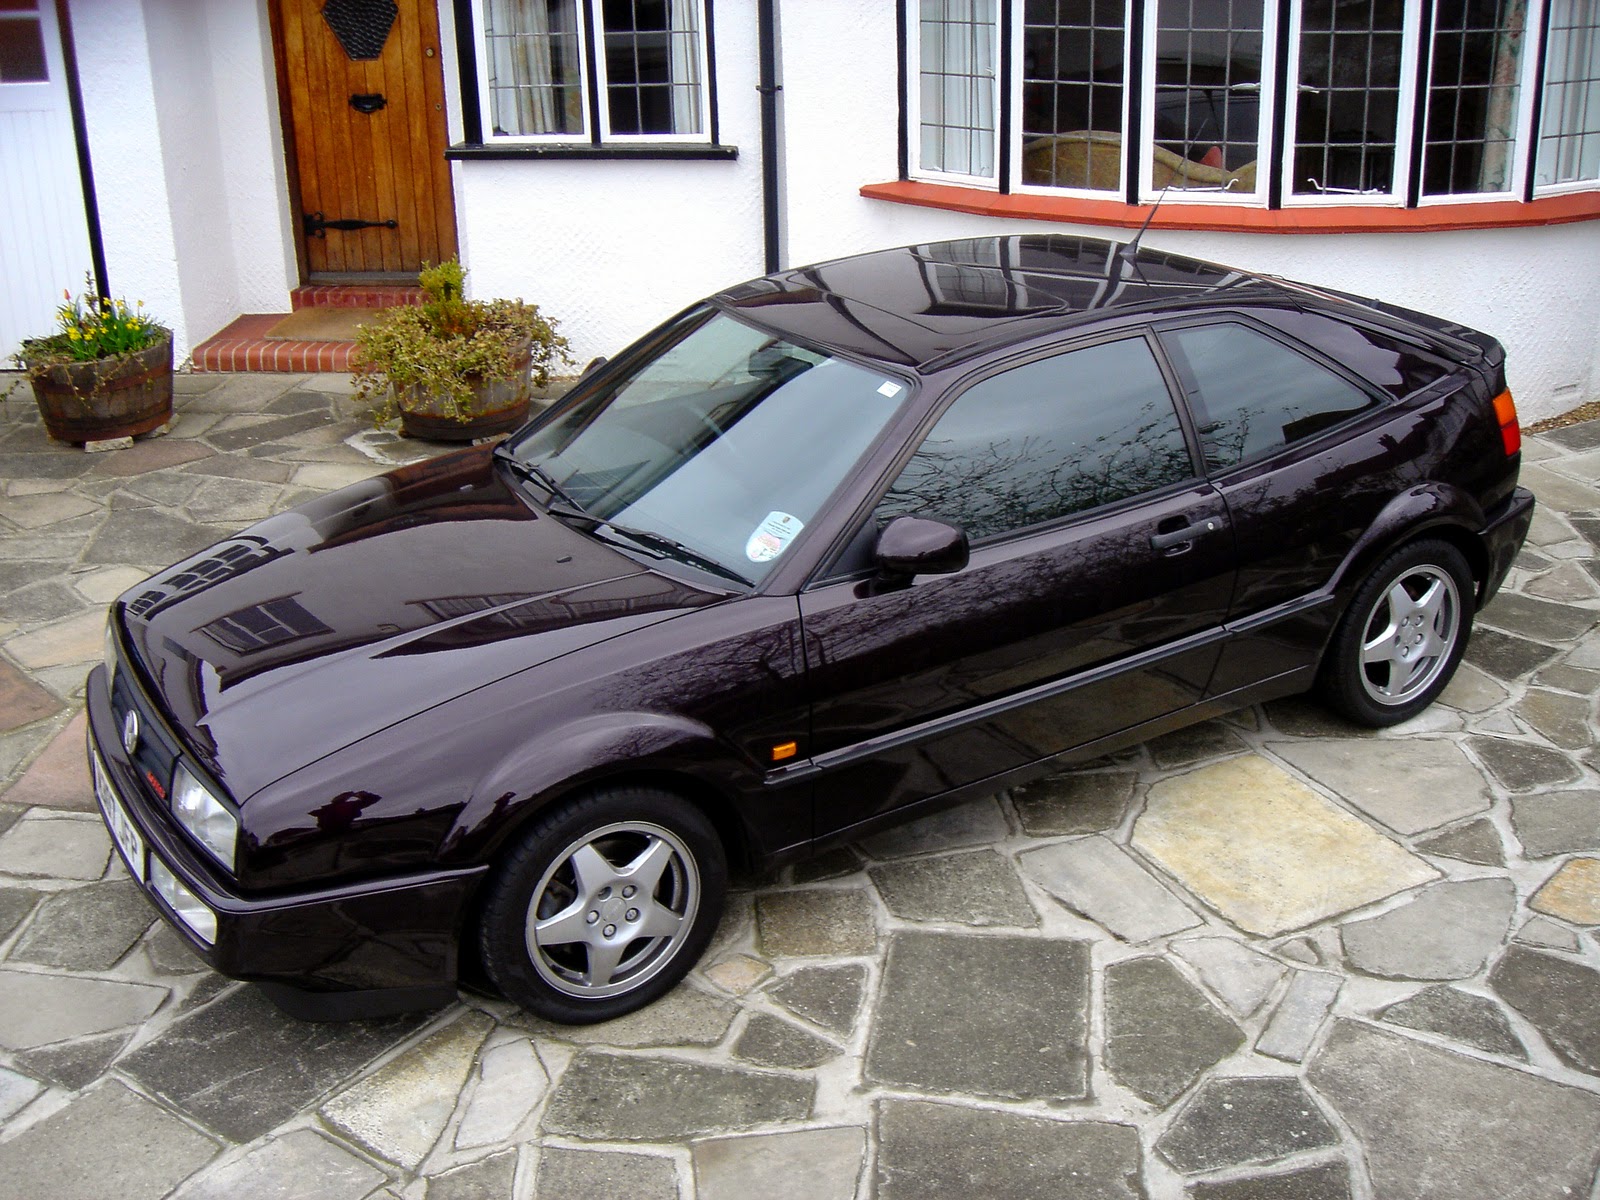 1994 VW Corrado Owners Manual